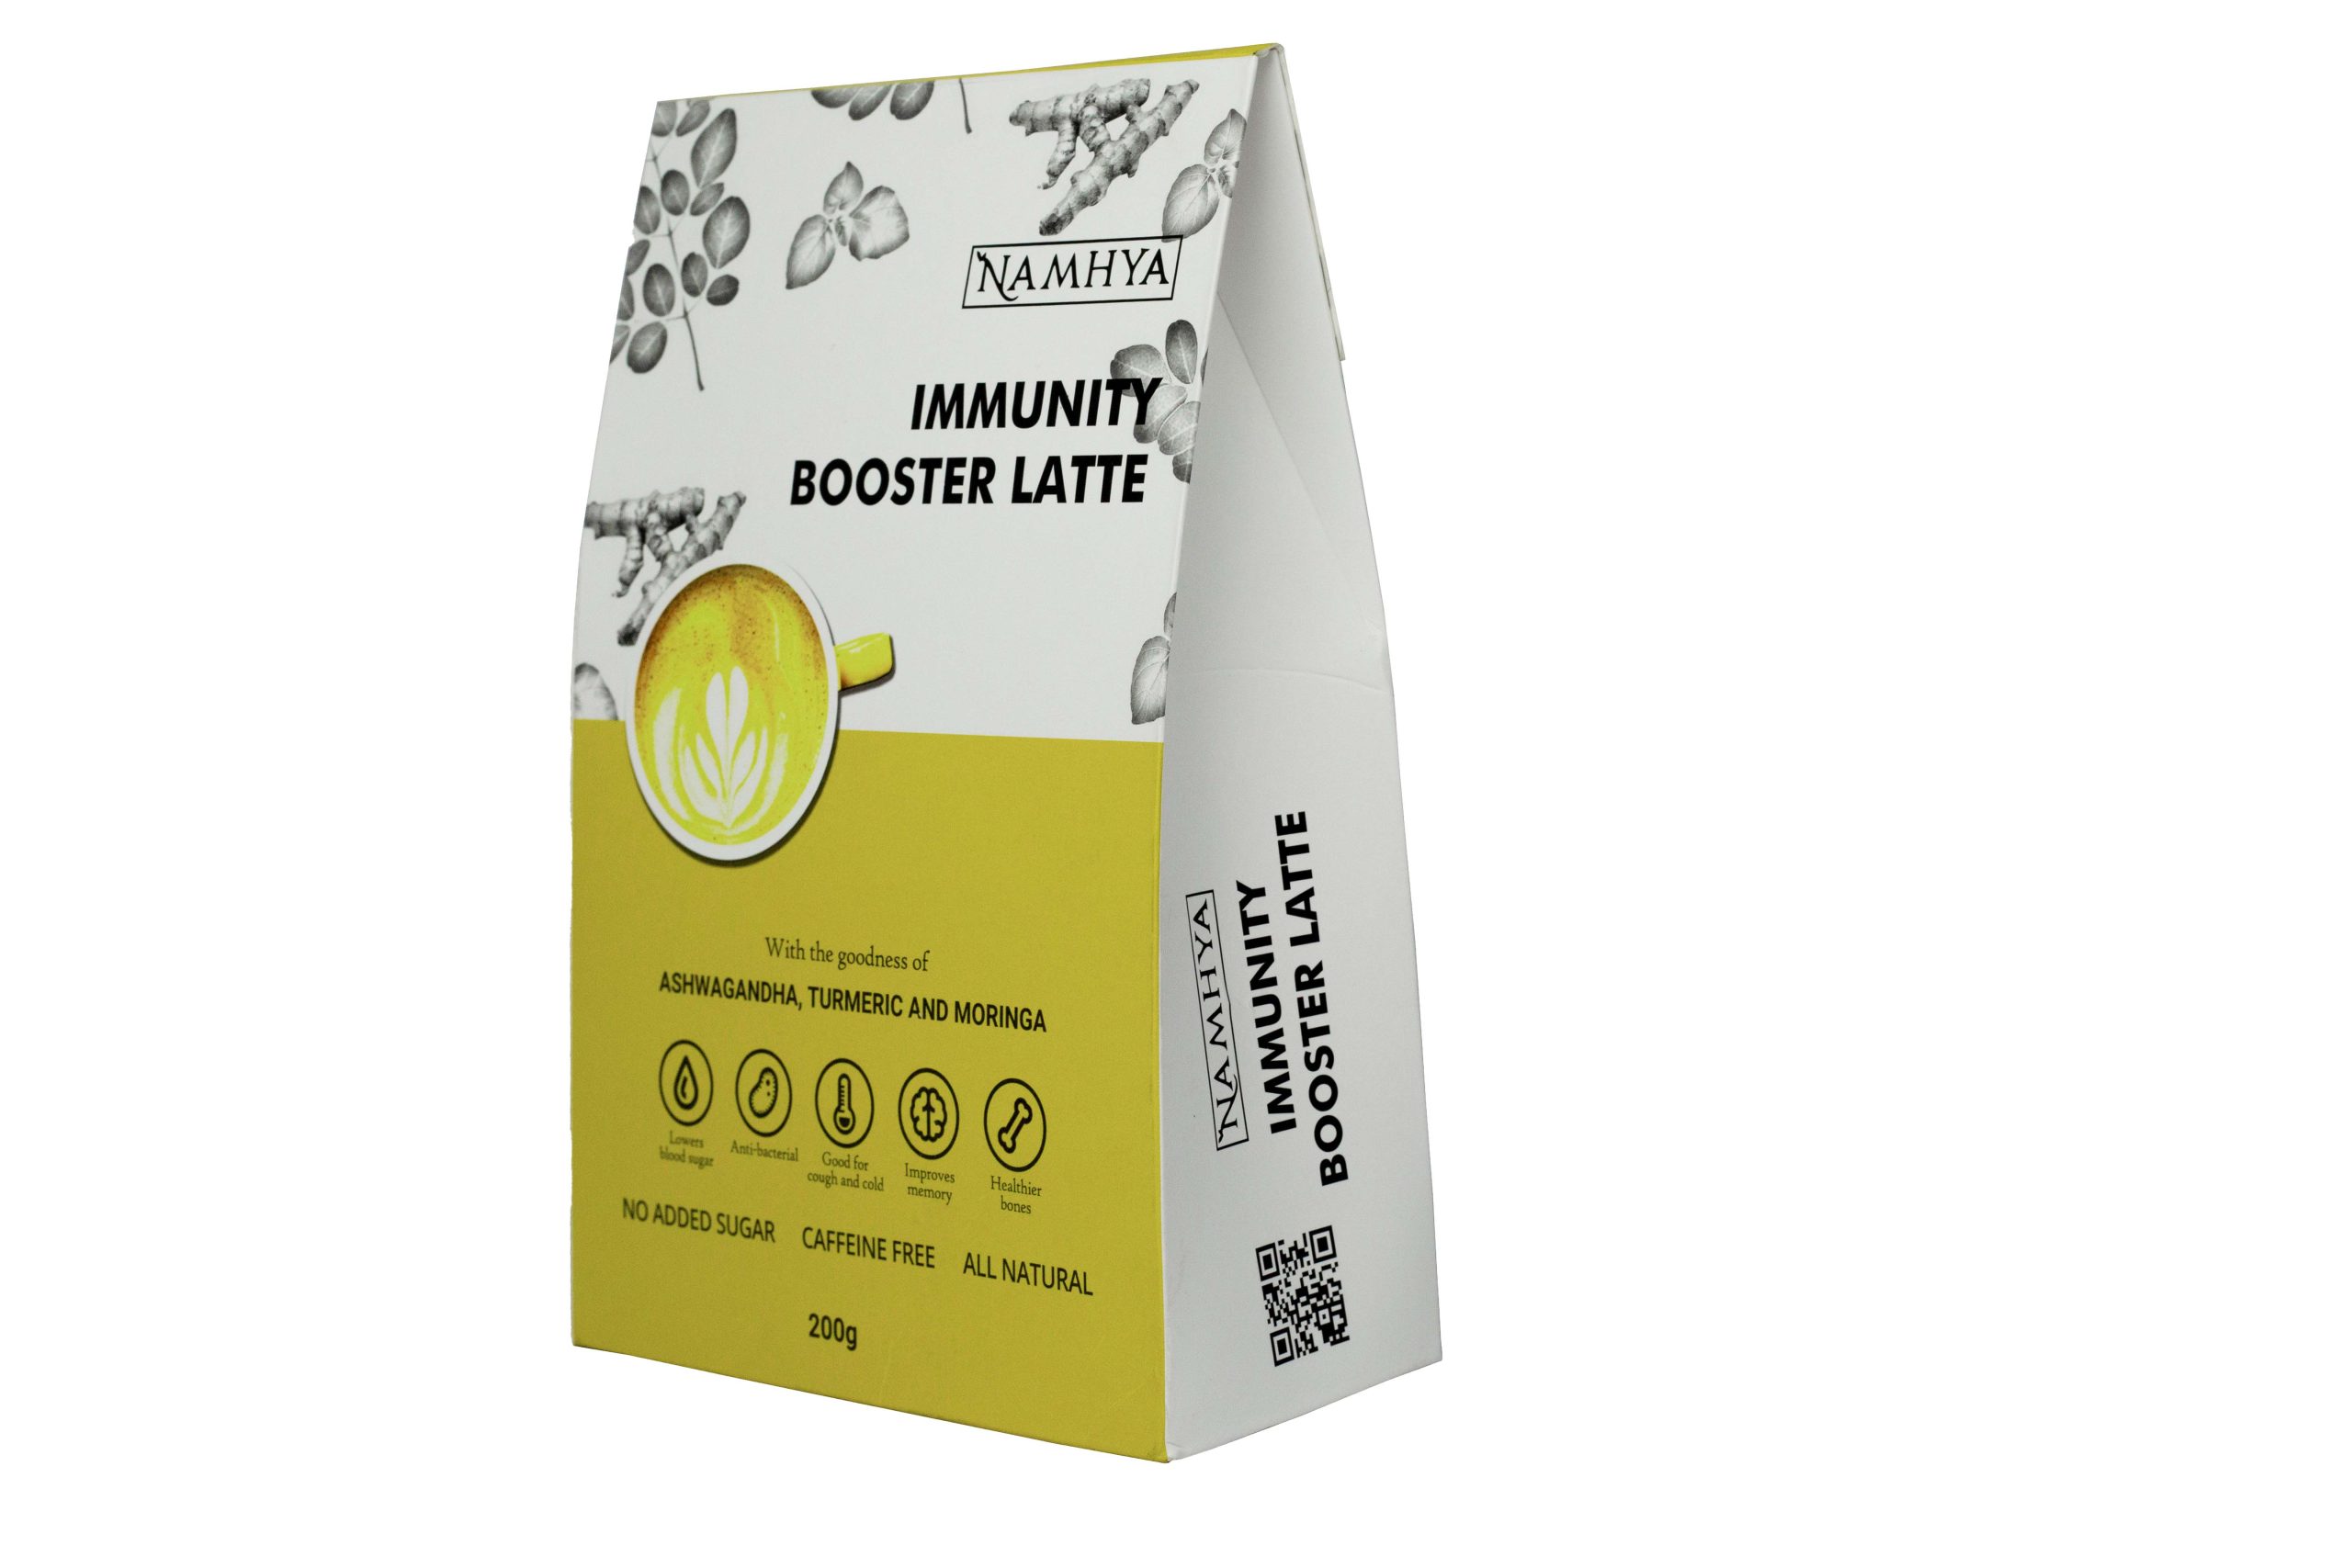 Product: Namhya Immunity Booster Latte